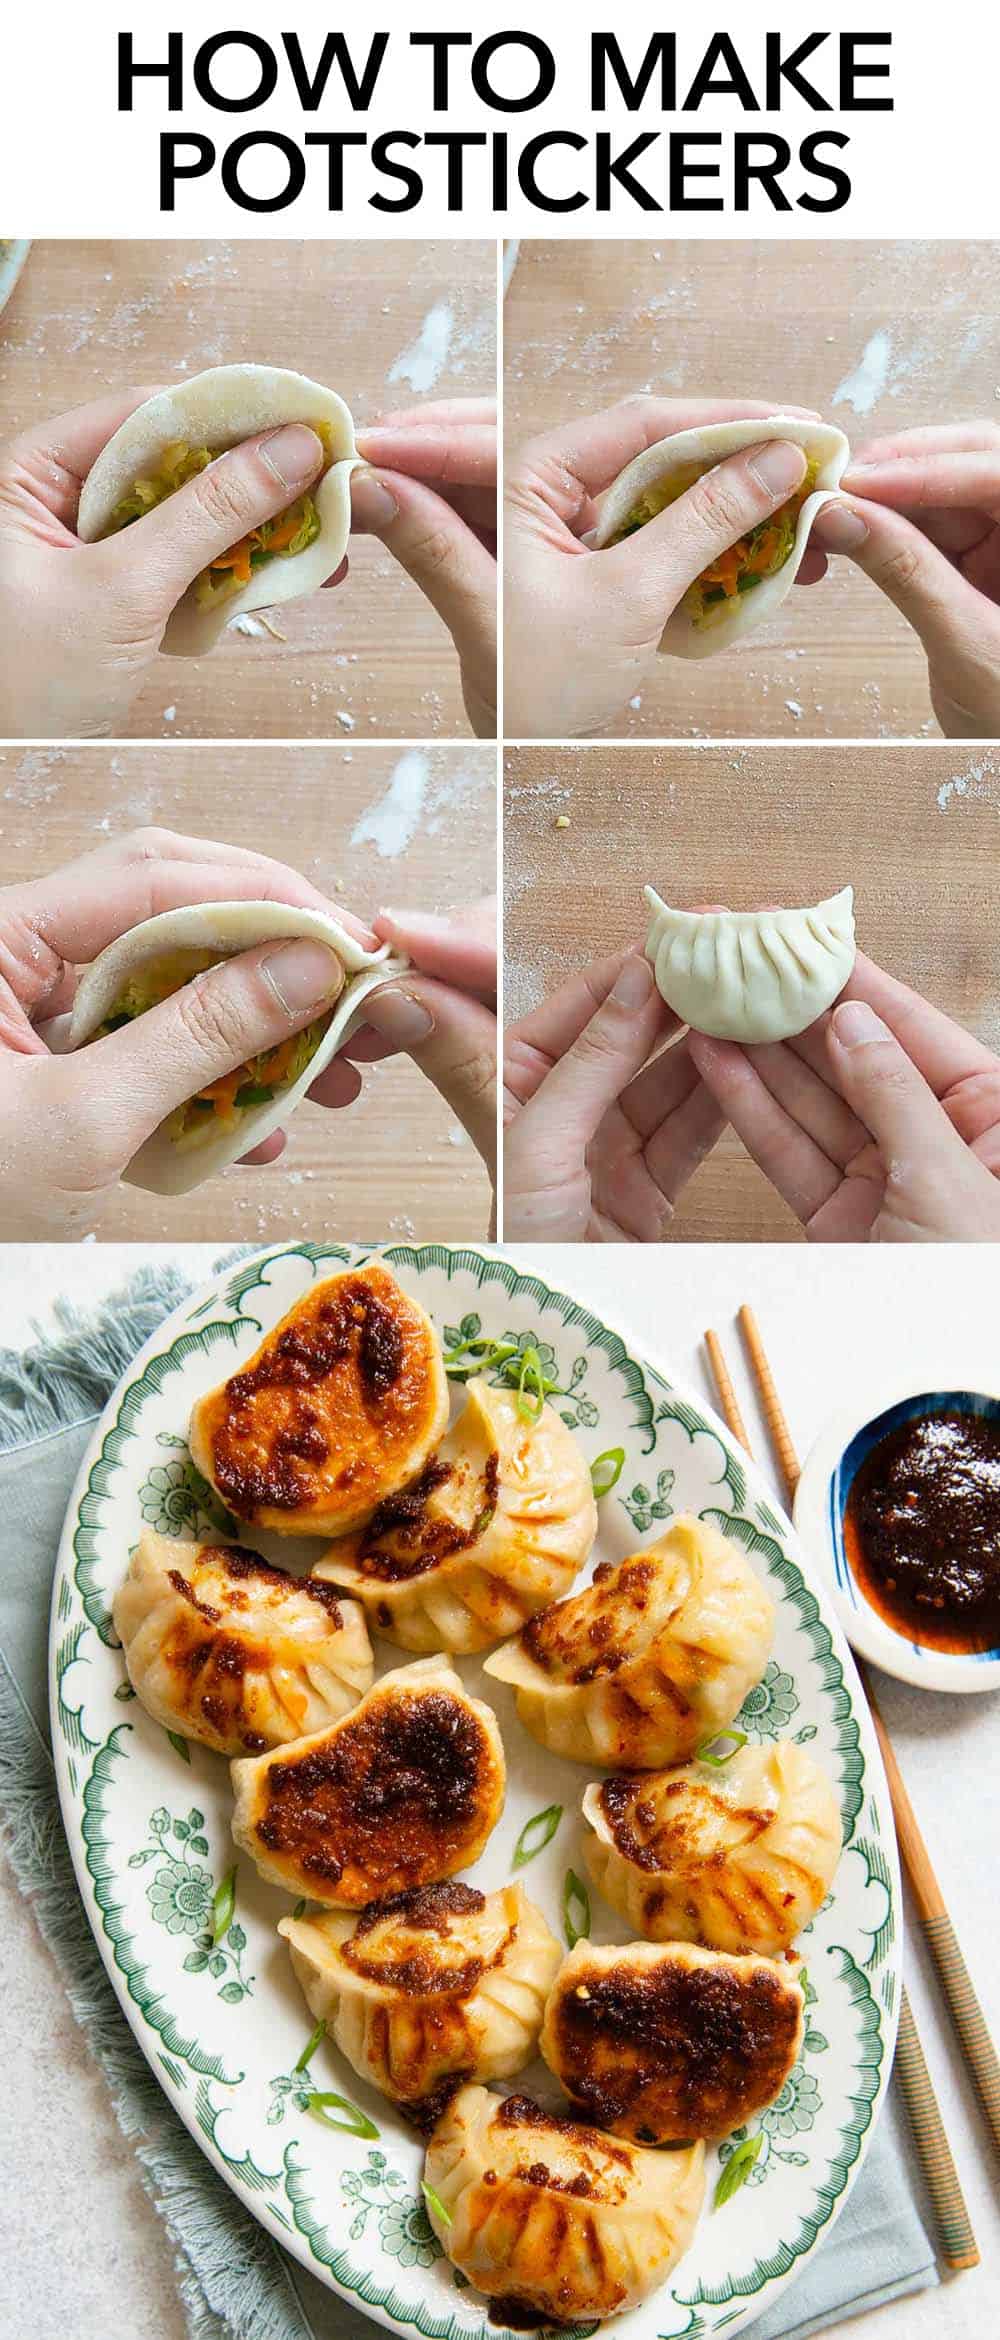 How to Make Dumplings